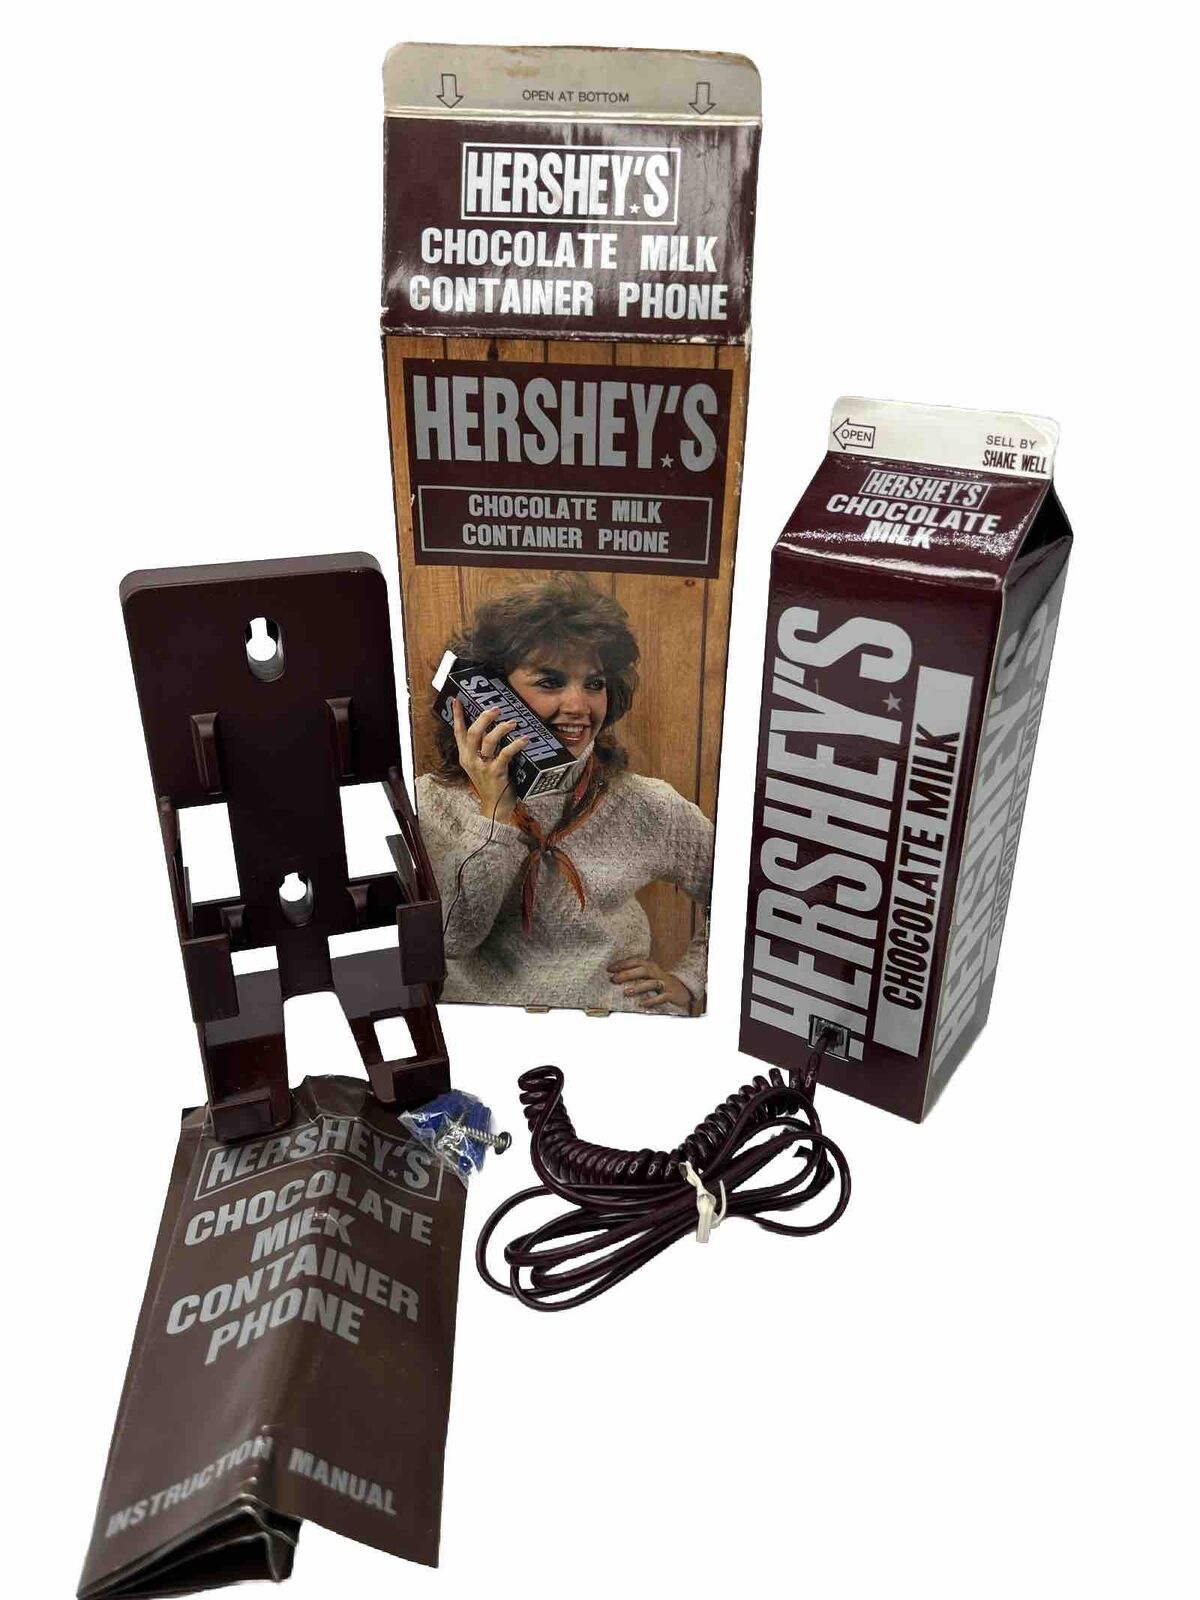 Hersheys Chocolate Milk Container Phone Model 6000 1985 Vintage Telephone WORKS